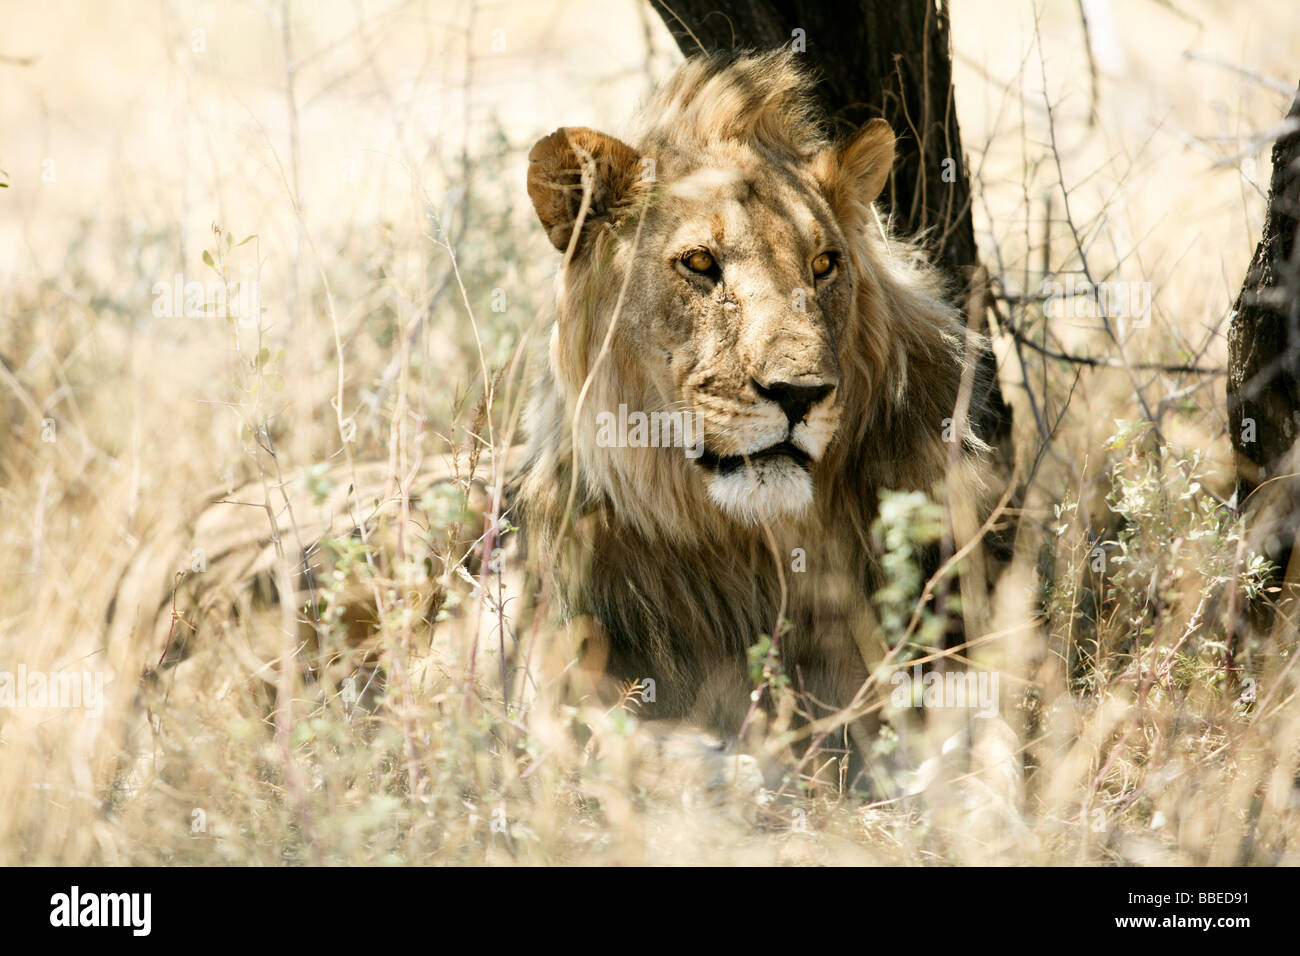 Lion in Grass, Etosha National Park, Kunene Region, Namibia Stock Photo